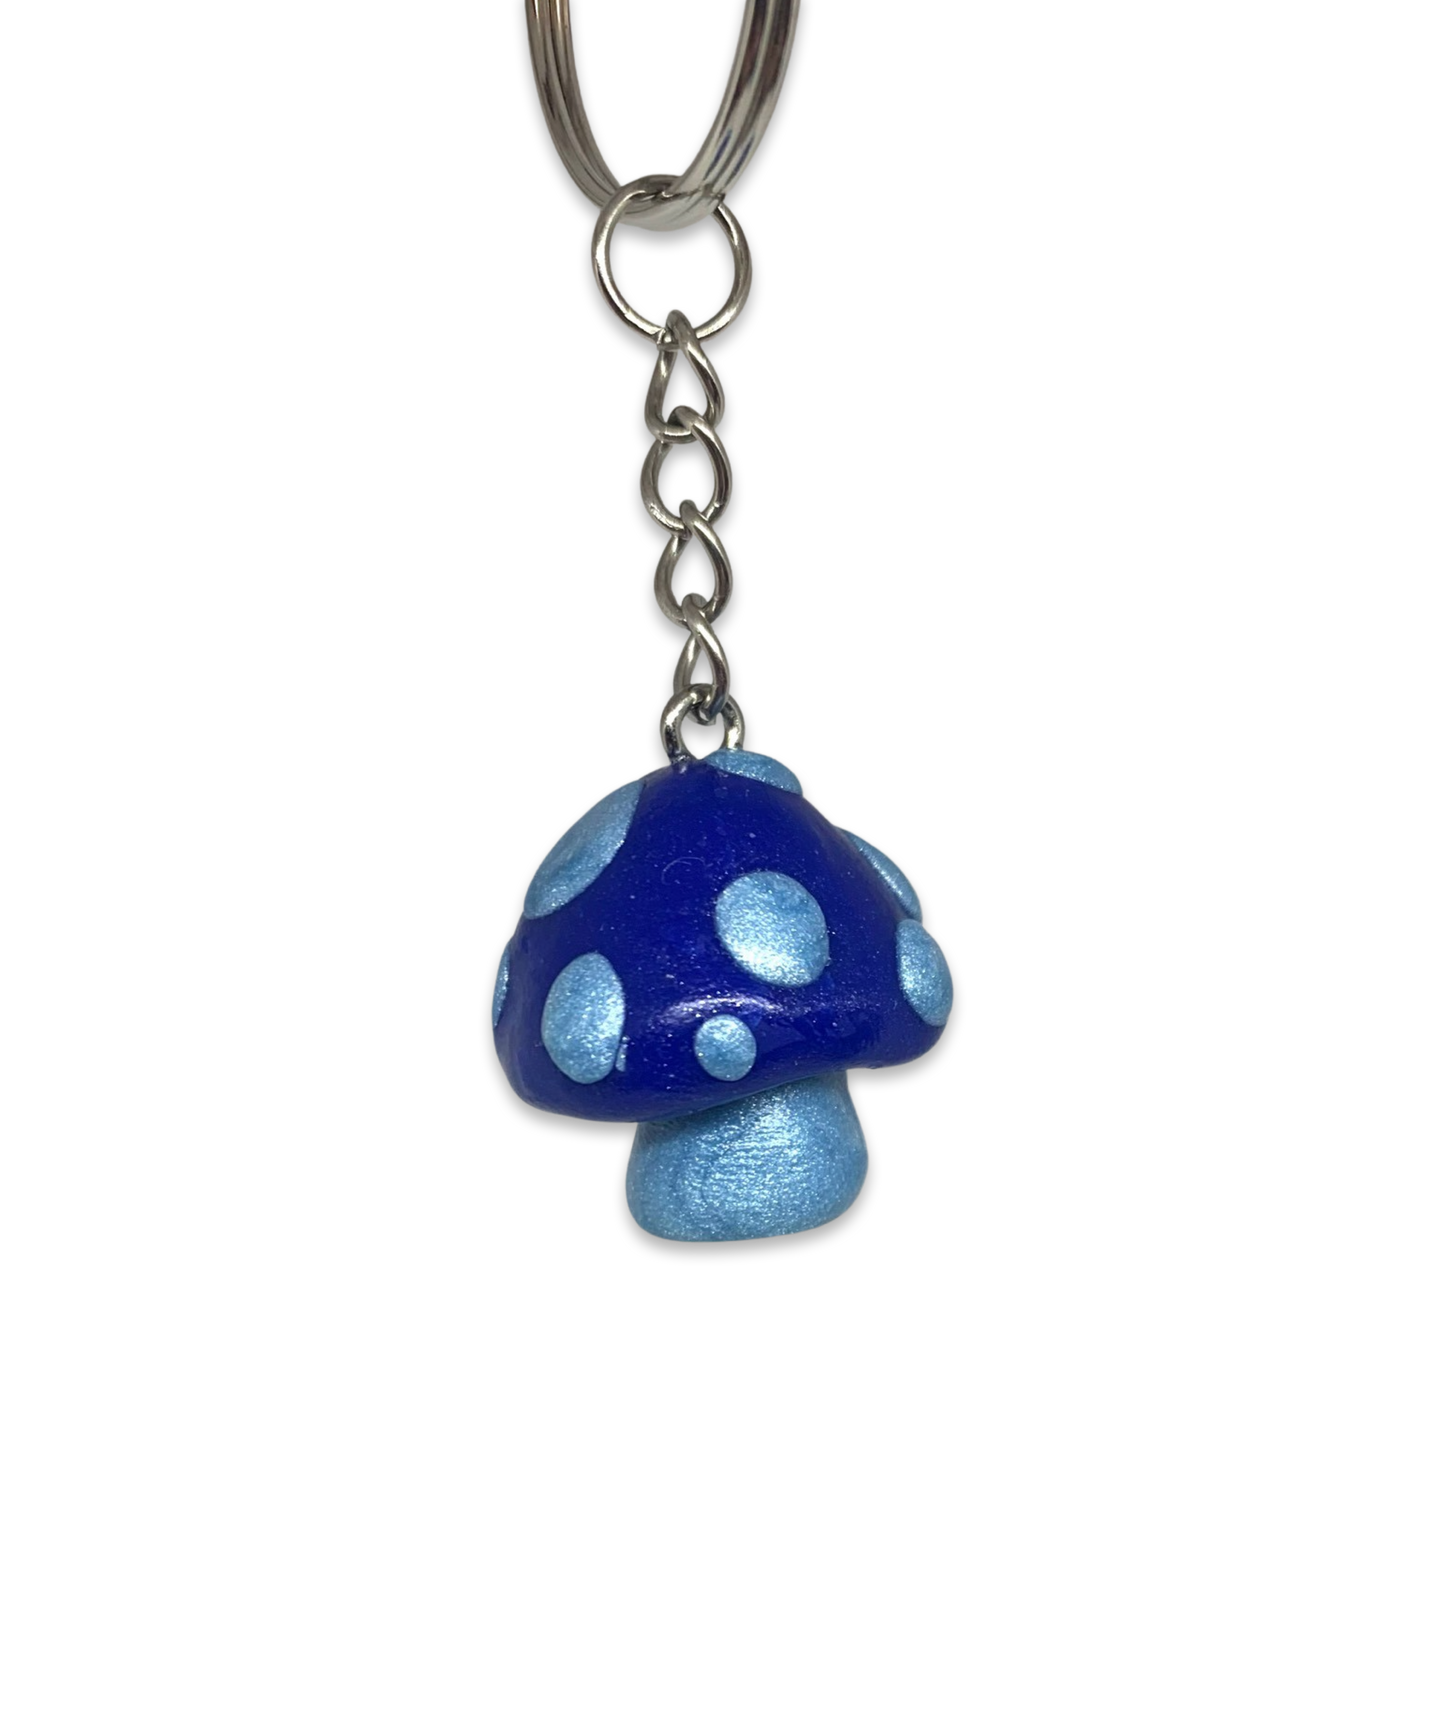 Dark Blue and Shimmer Light Blue Monochromatic Spotted Mushroom Keychains, cartoon, stylized, cute